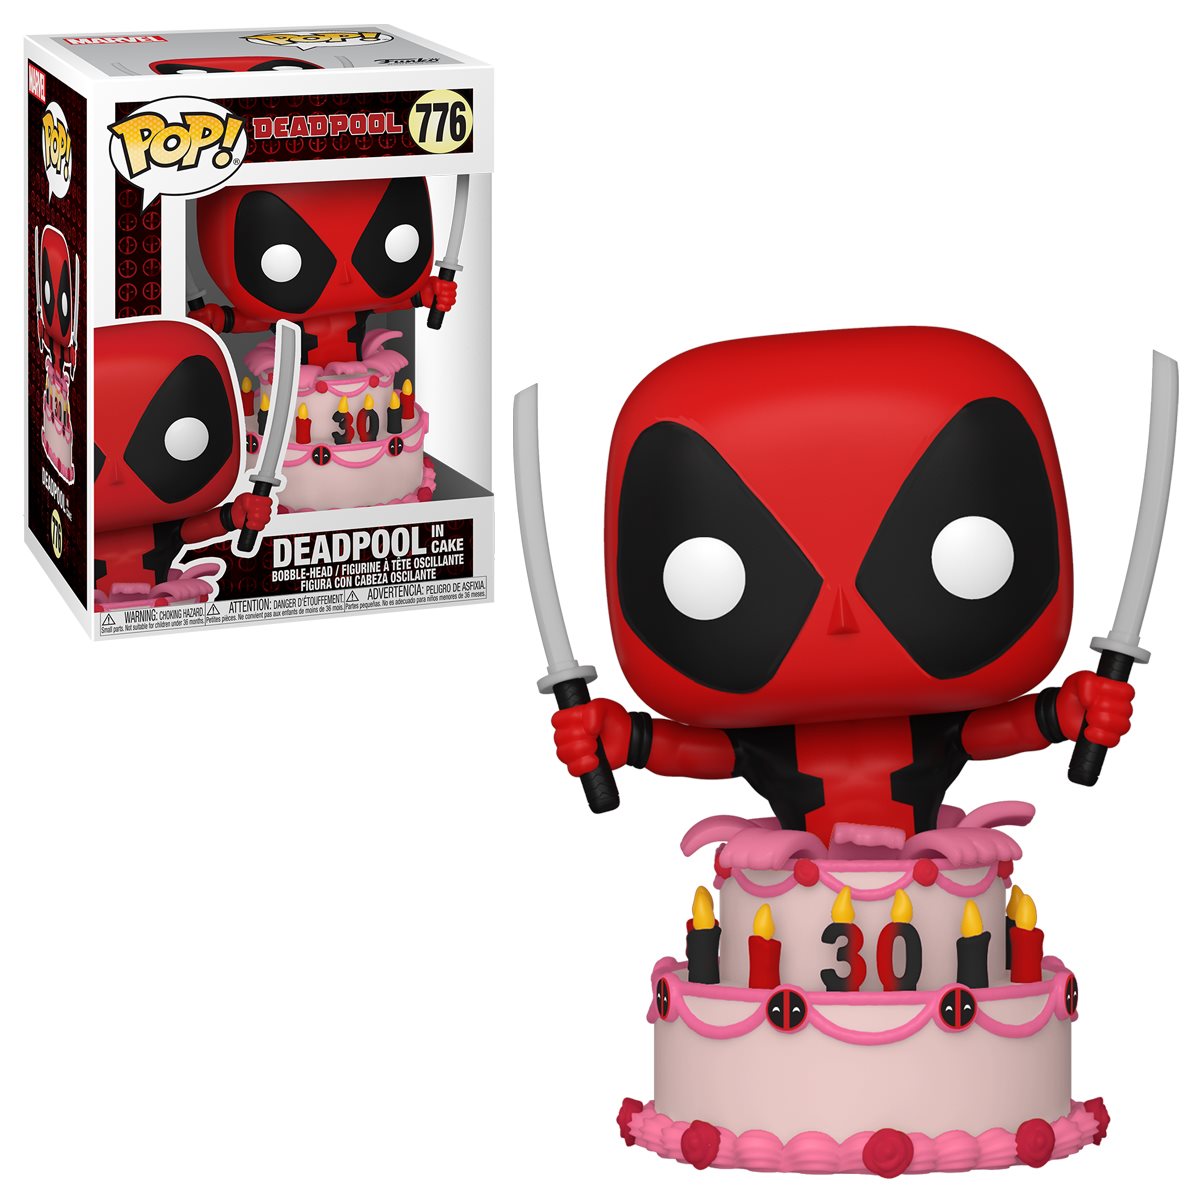 Deadpool 30th Anniversary Deadpool in Cake Funko Pop! Vinyl Figure